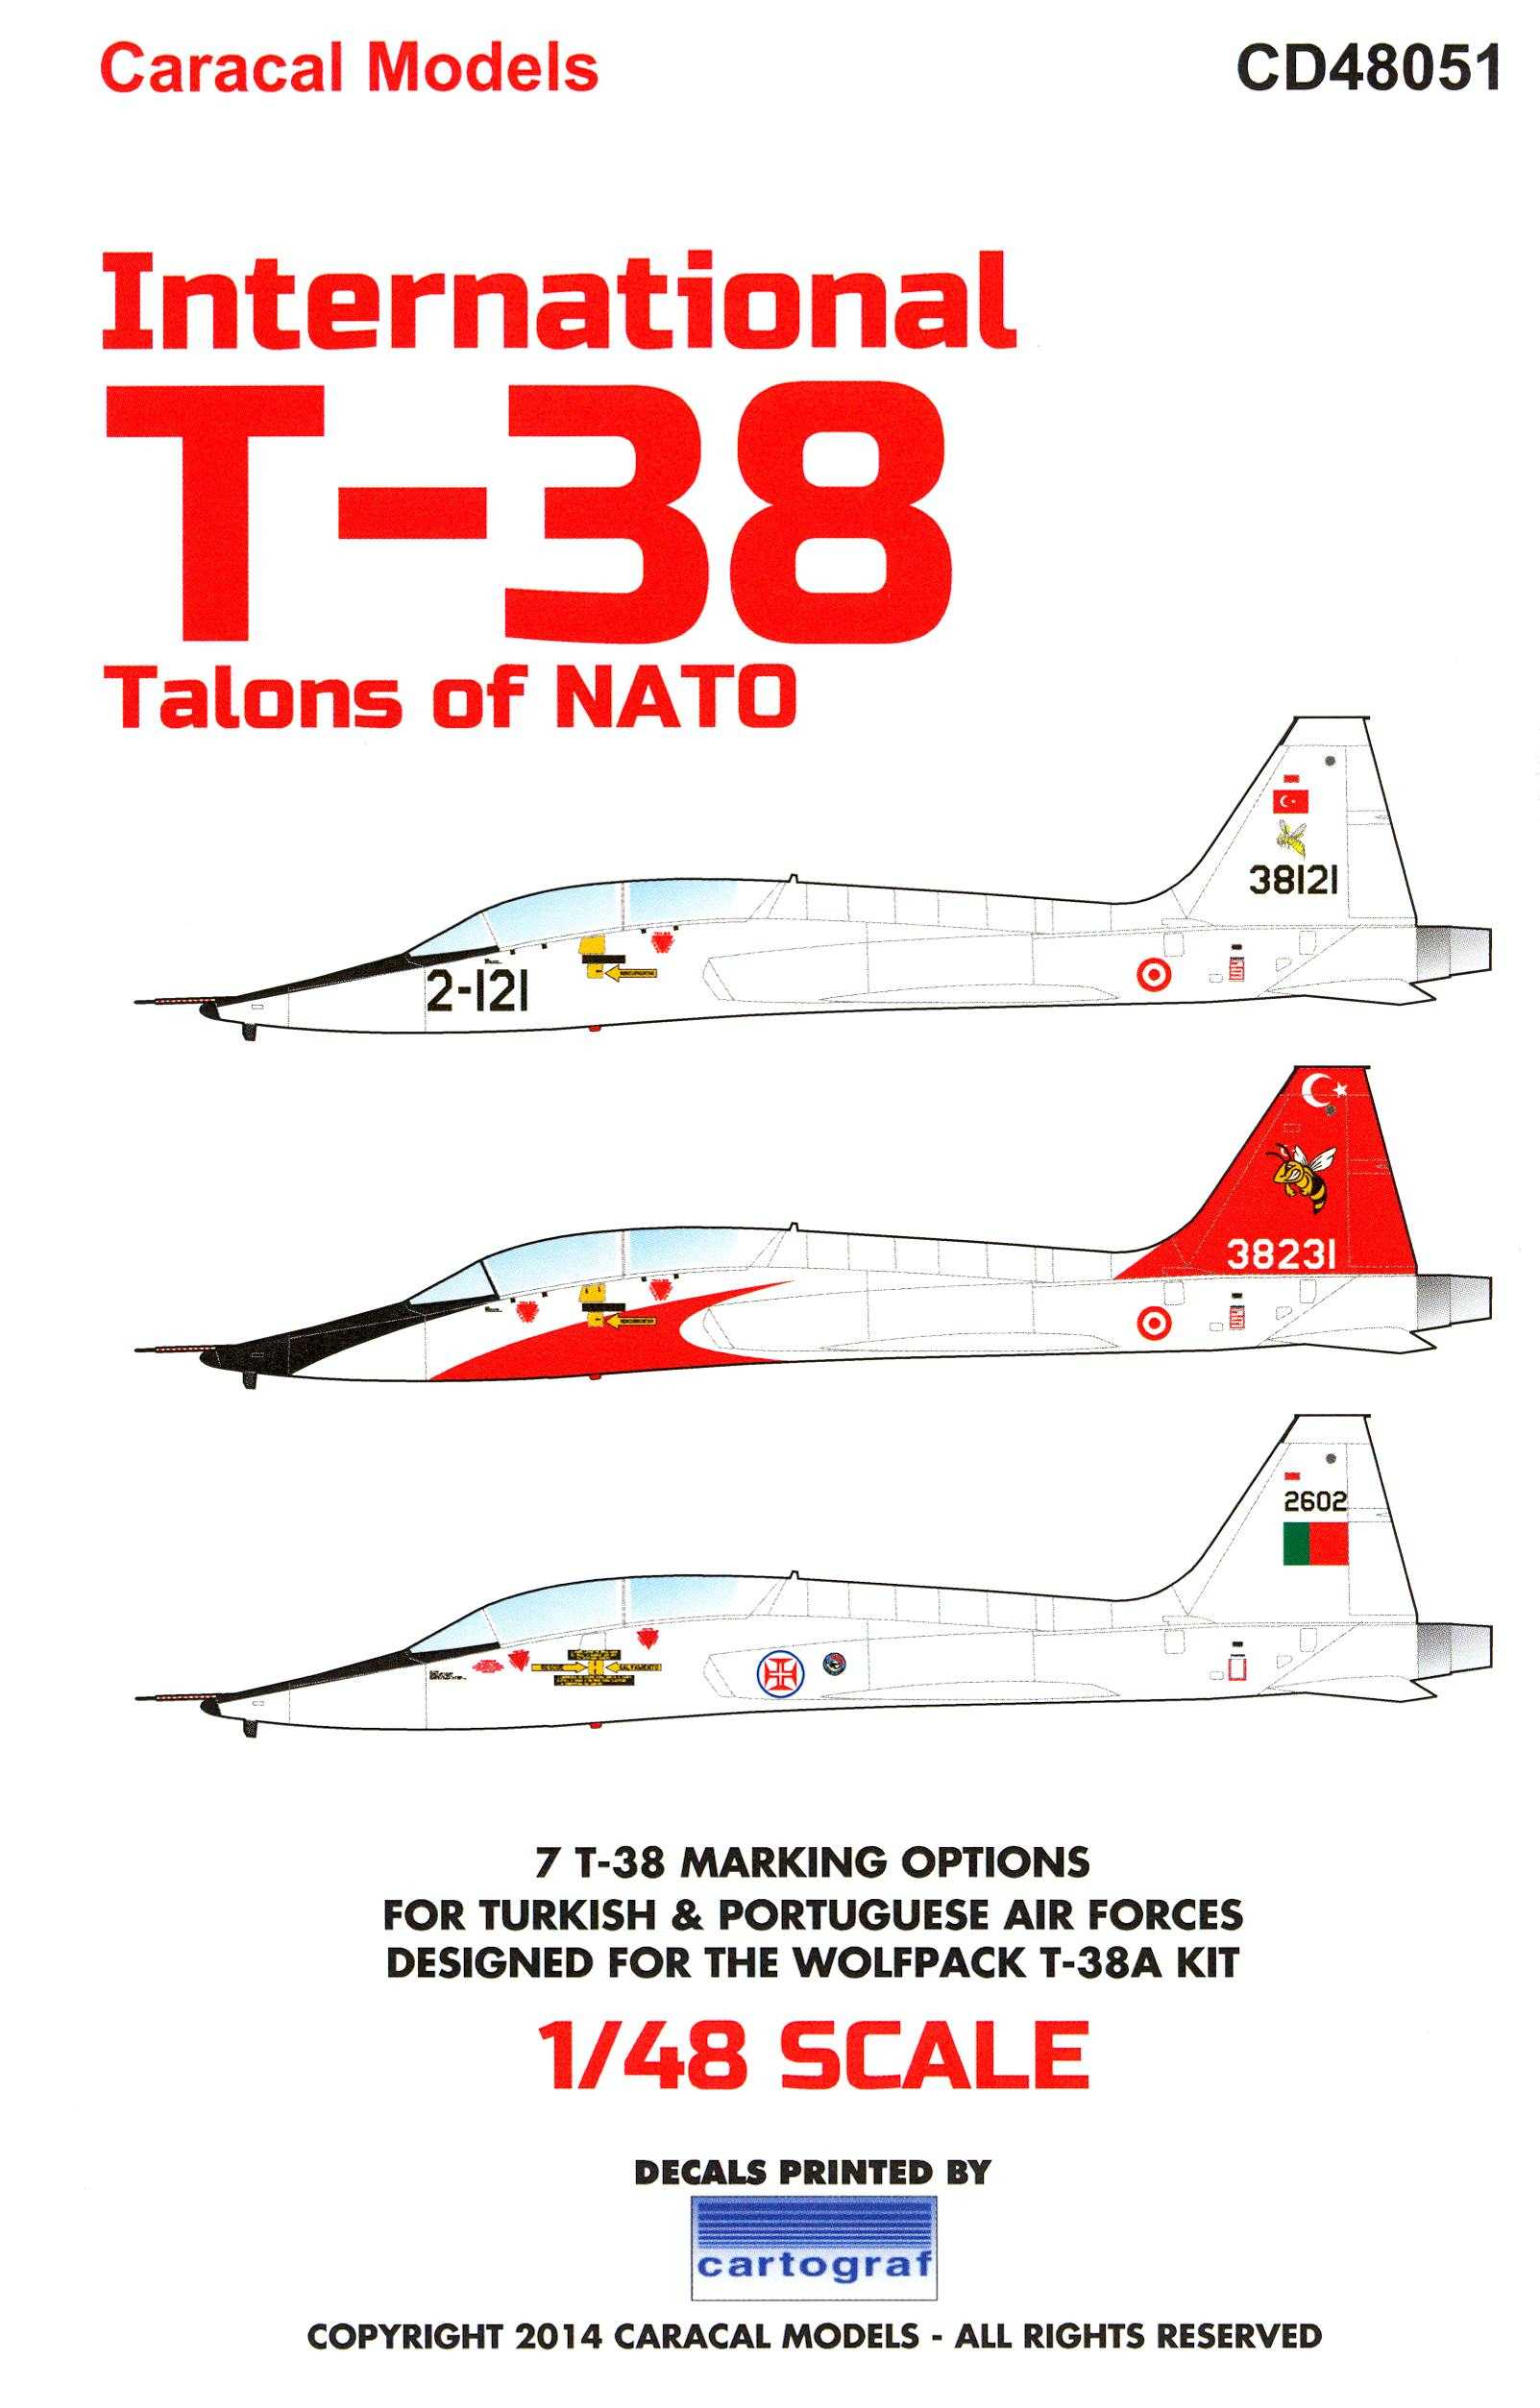 Bestfong Decal 1//48 Northrop T-38 Talon R.O.C. Taiwan AF